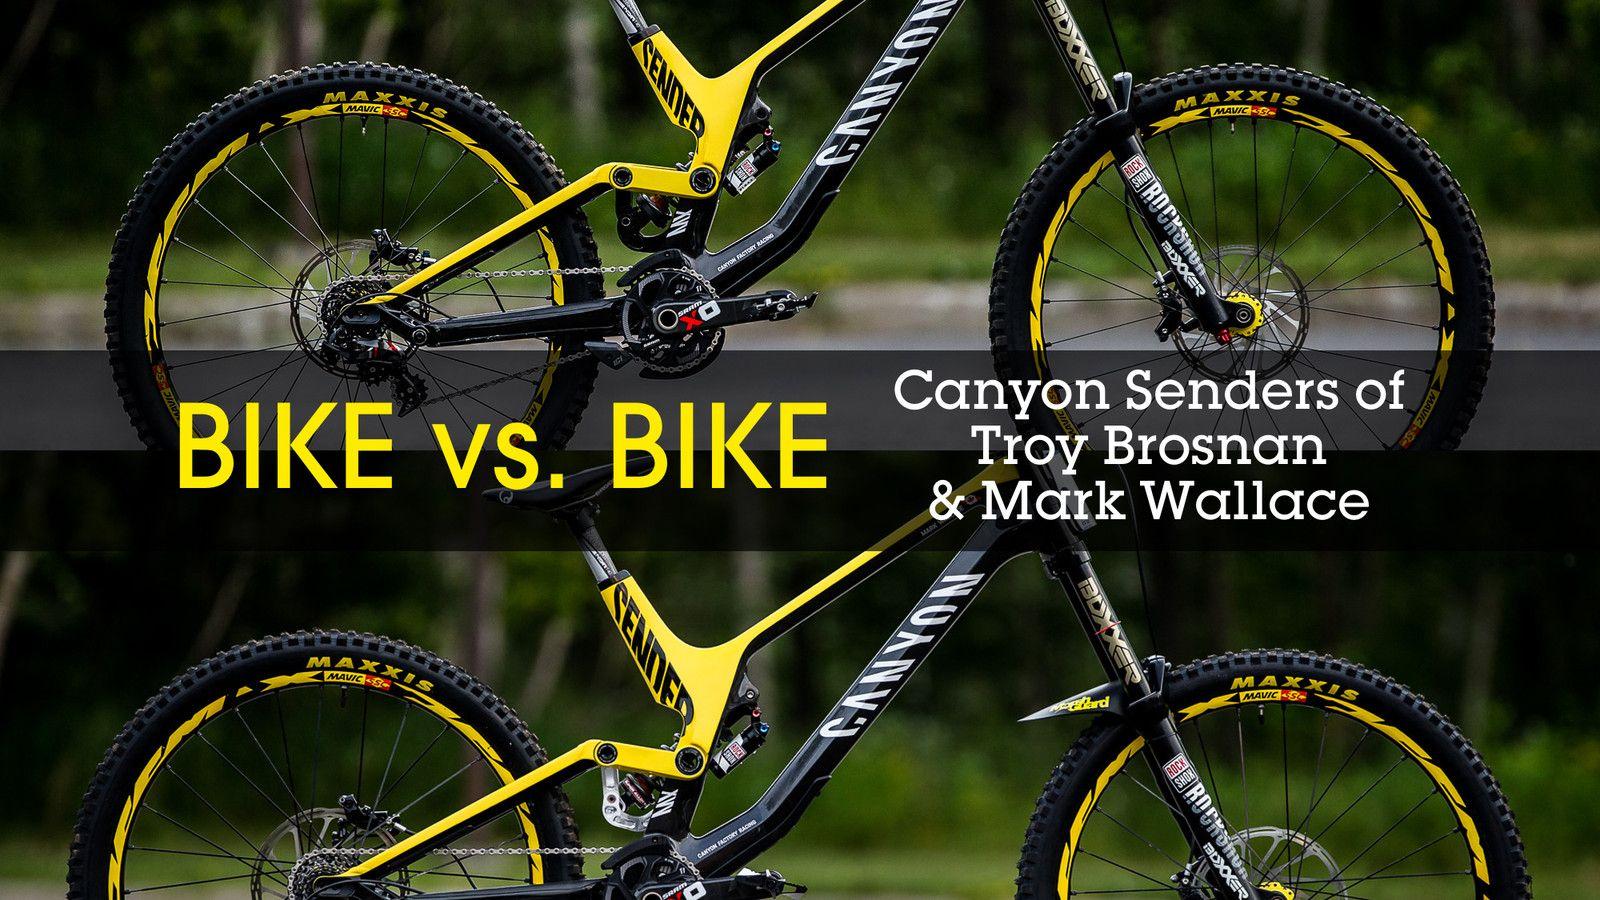 Bike vs. Bike Brosnan and Mark Wallace's Canyon Sender DH